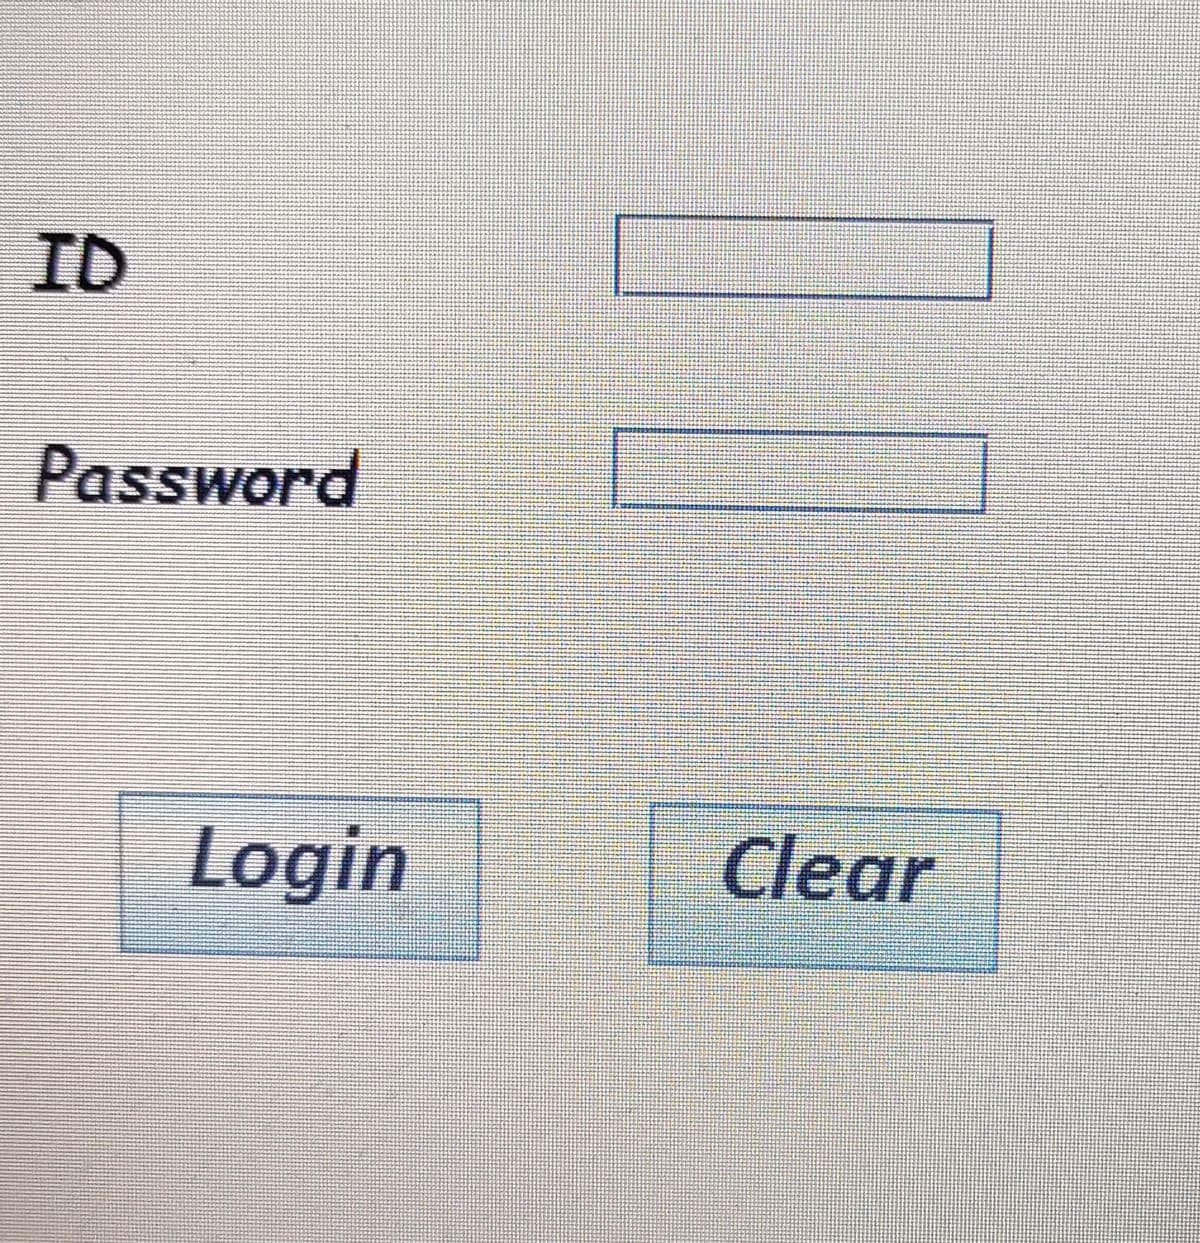 ID
Password
Login
Clear
